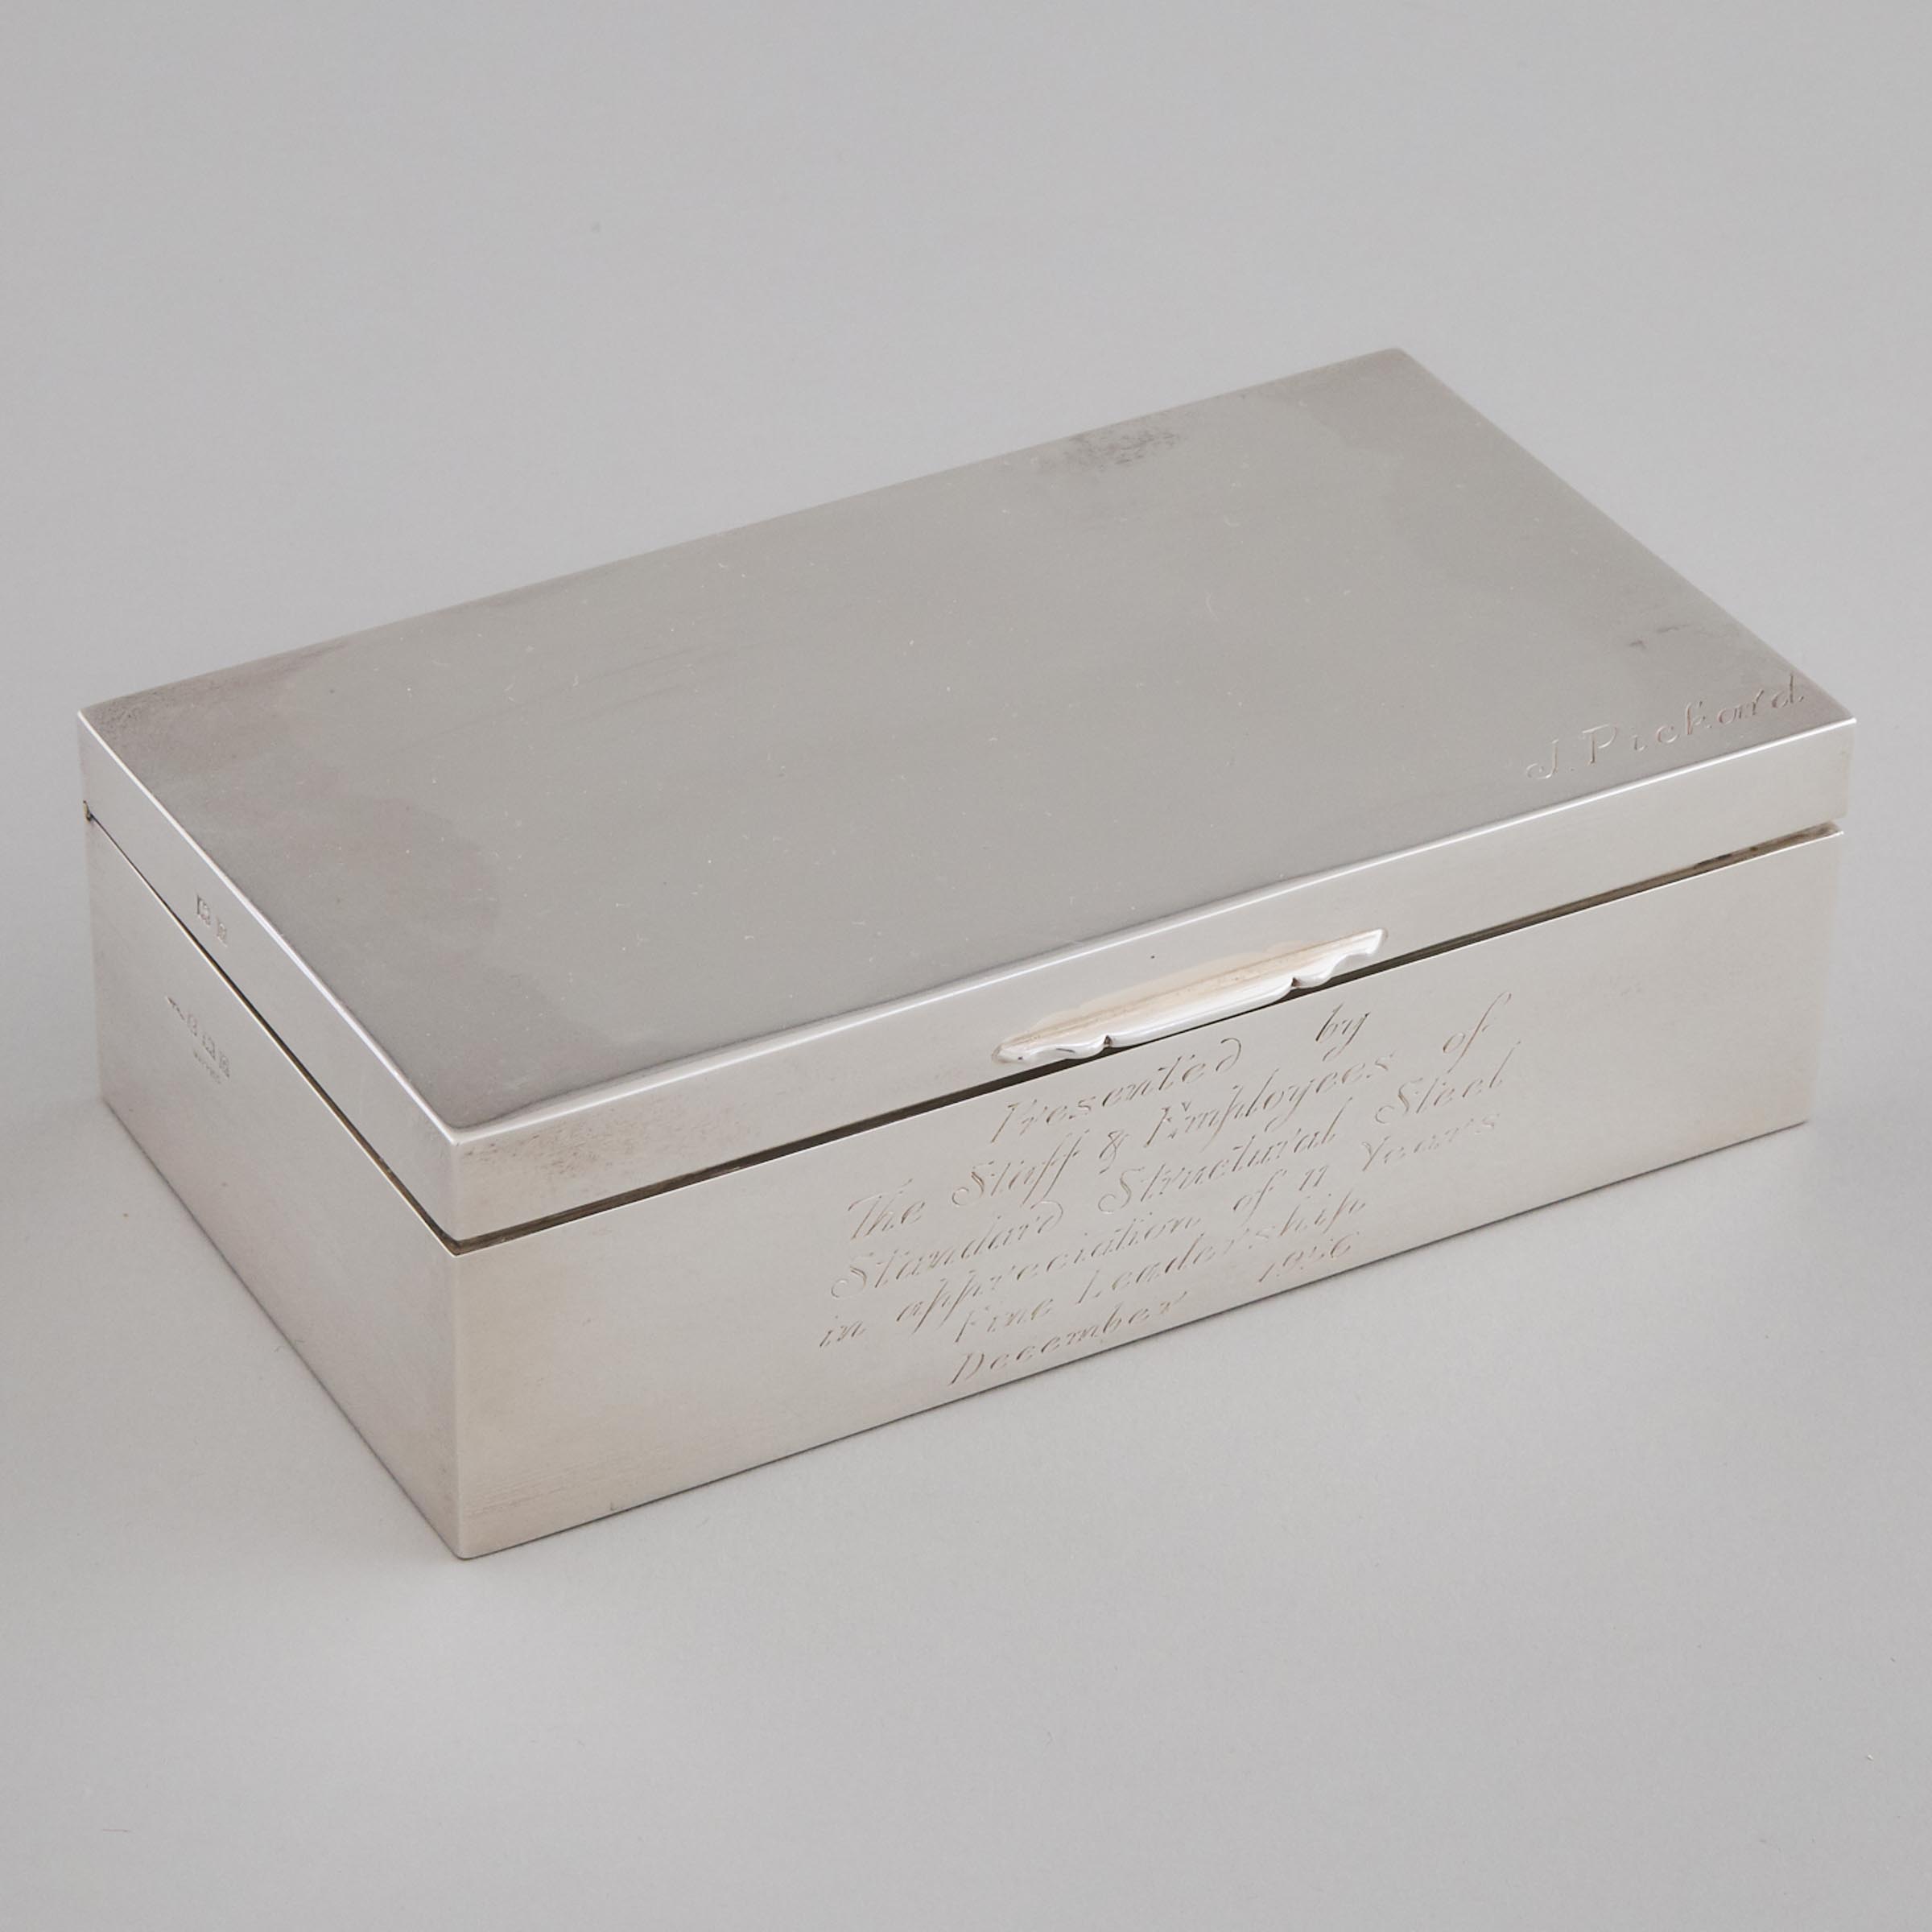 English Silver Rectangular Cigarette Box, J.T. Deeley Ltd., Birmingham, 1956